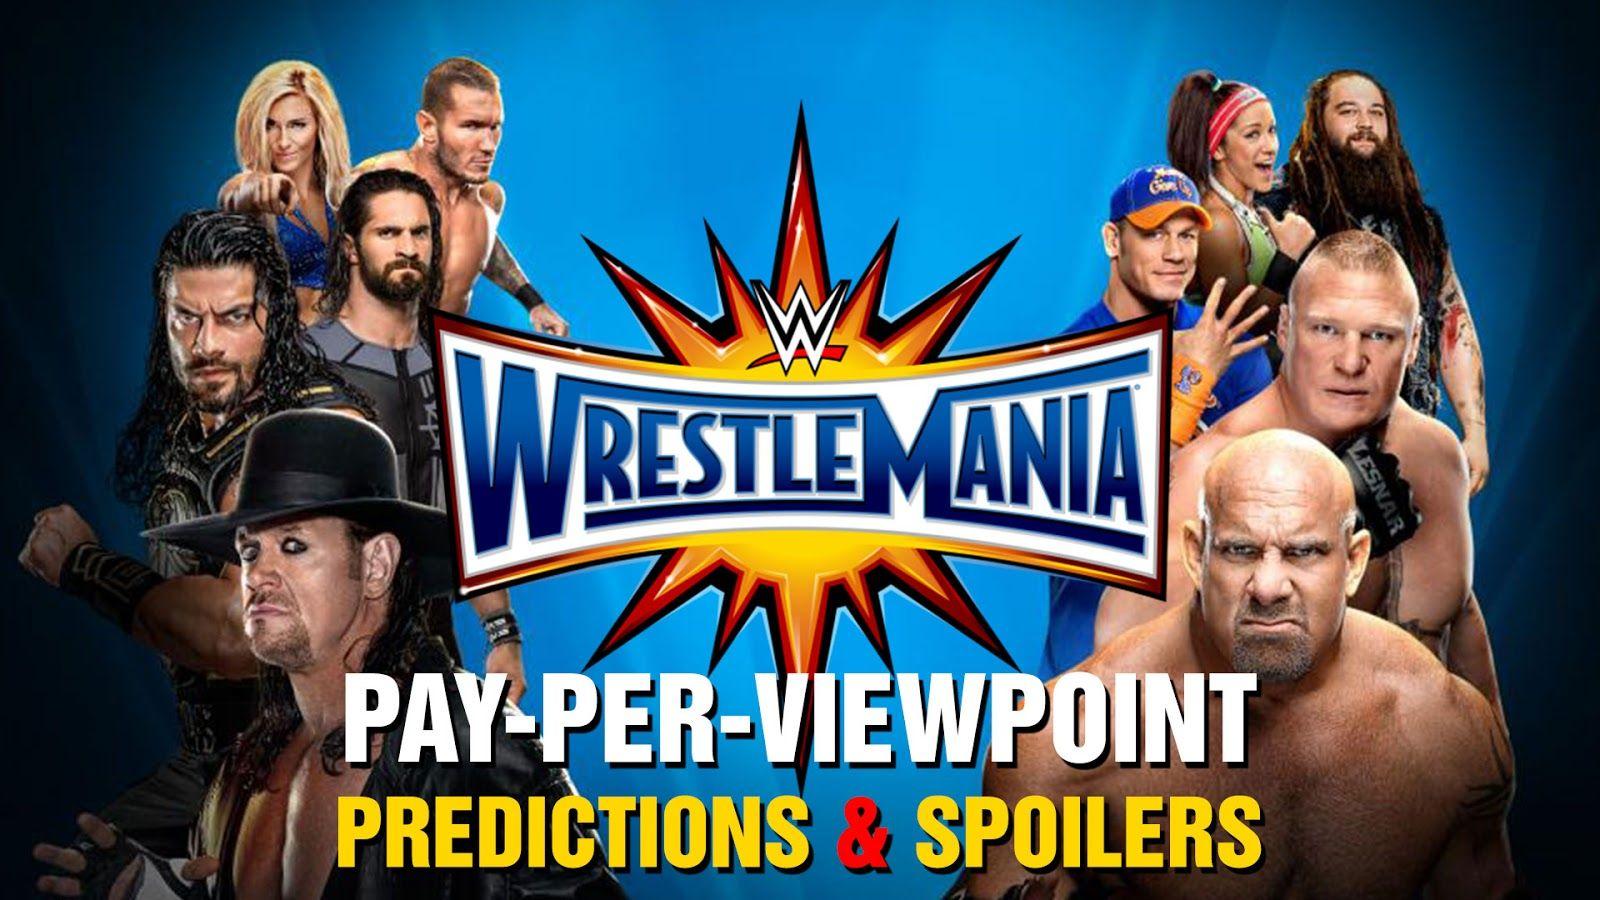 WWE WrestleMania 33 PPV Event Match Card & Predictions Rundown